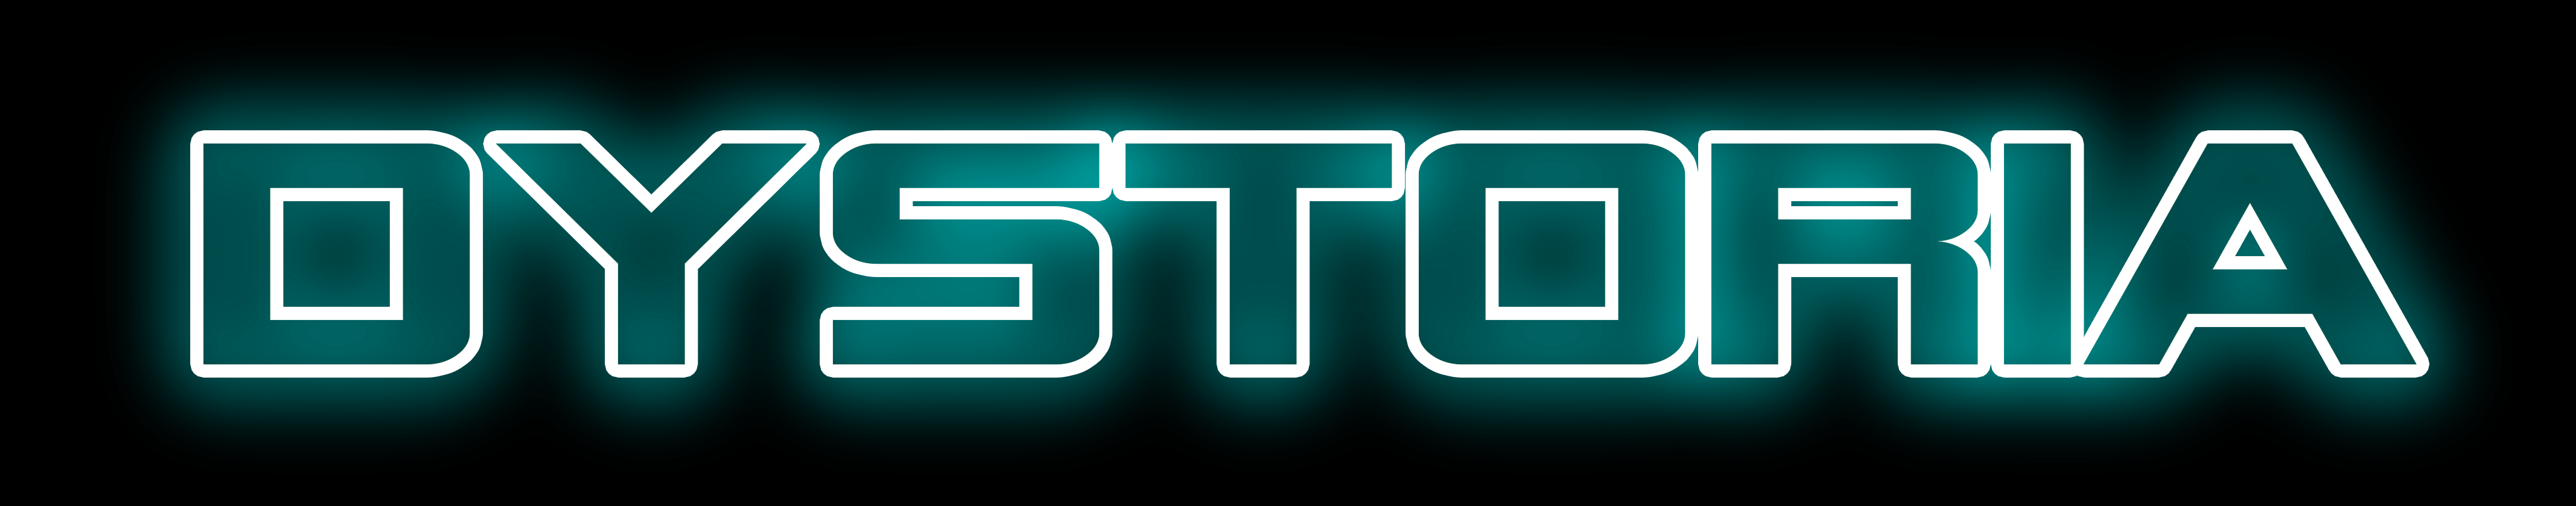 Dystoria Logo